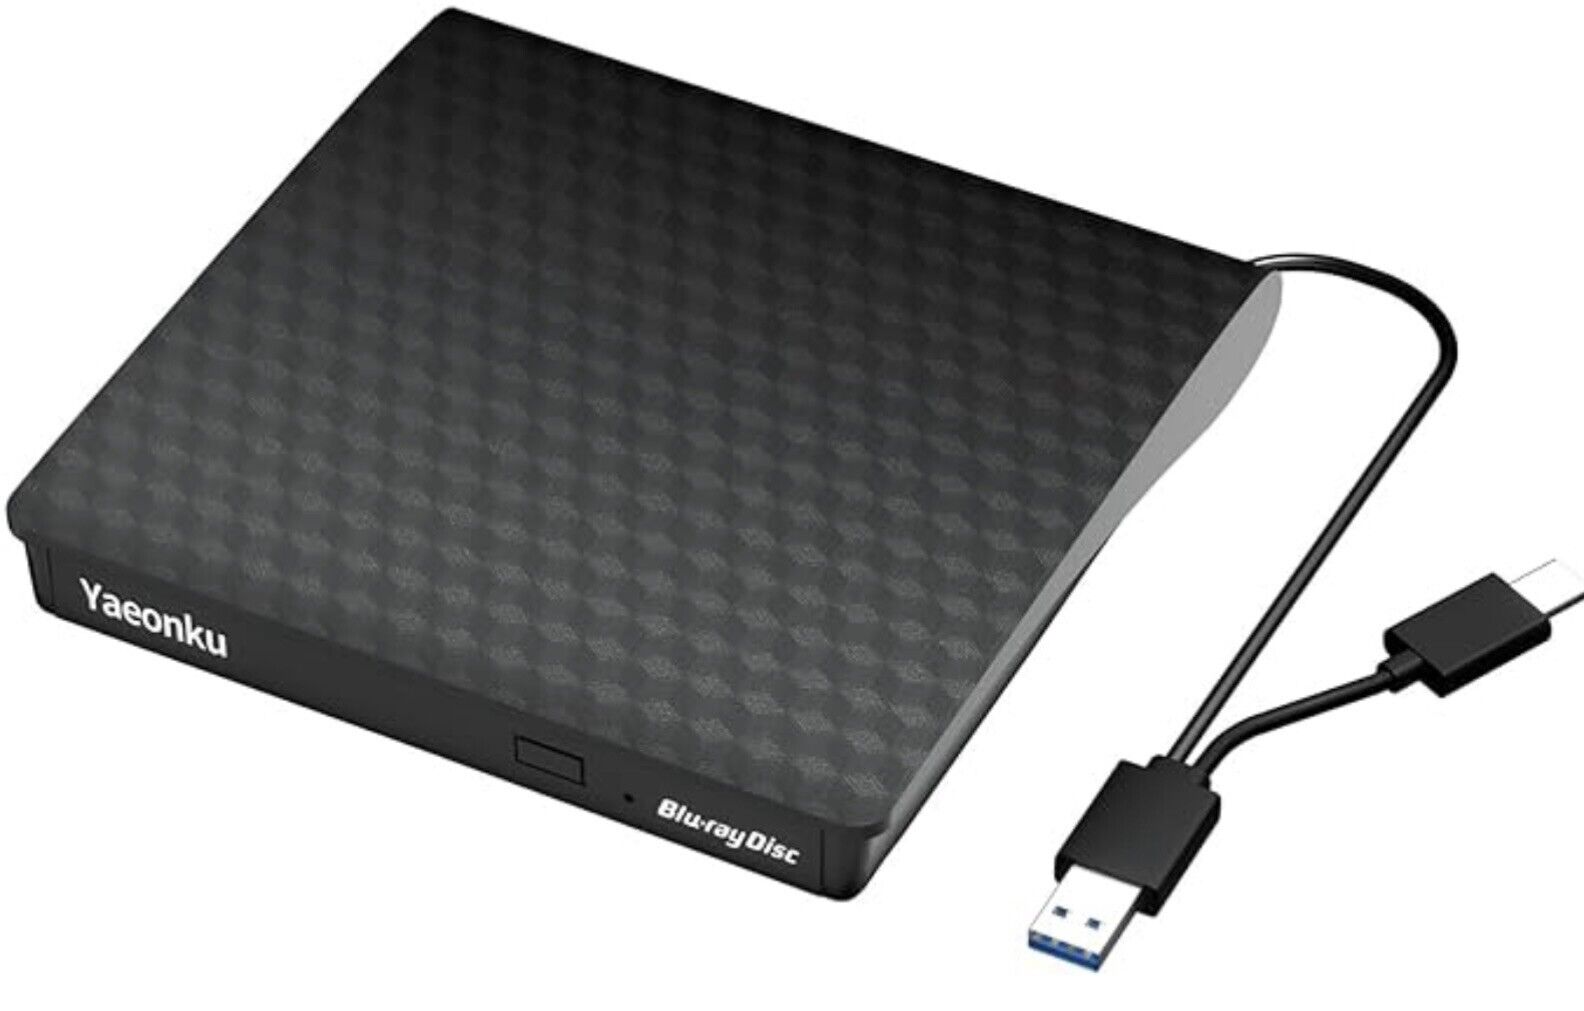  Yaeonku External Bluray Drive, USB 3.0 and Type-C Blu Ray DVD Burner